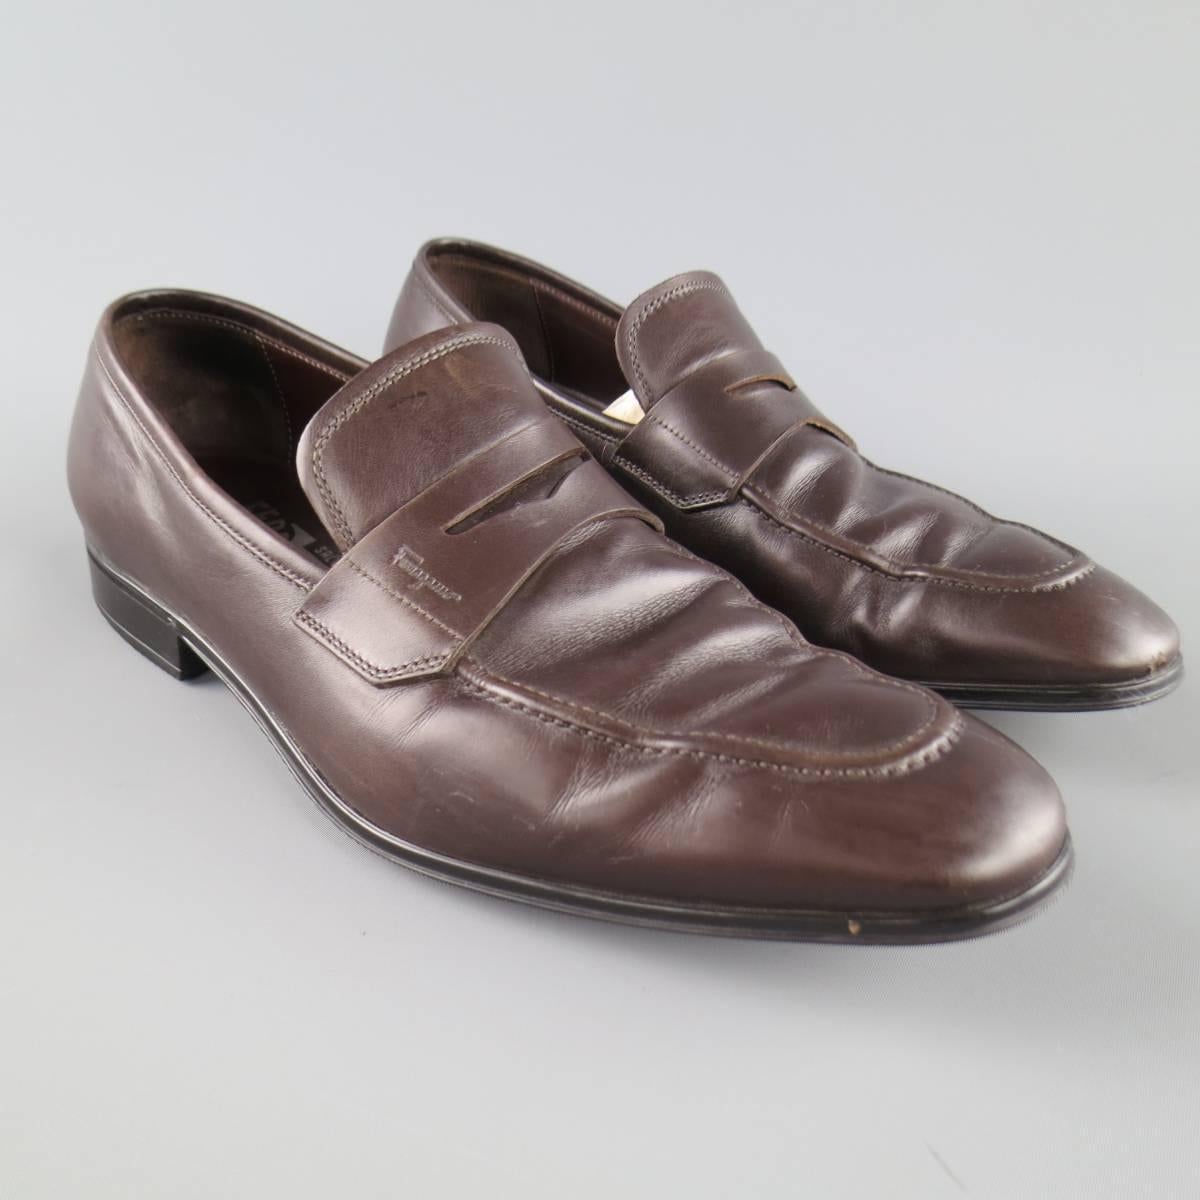 Gray Men's SALVATORE FERRAGAMO Size 8.5 Brown Leather Penny Loafers